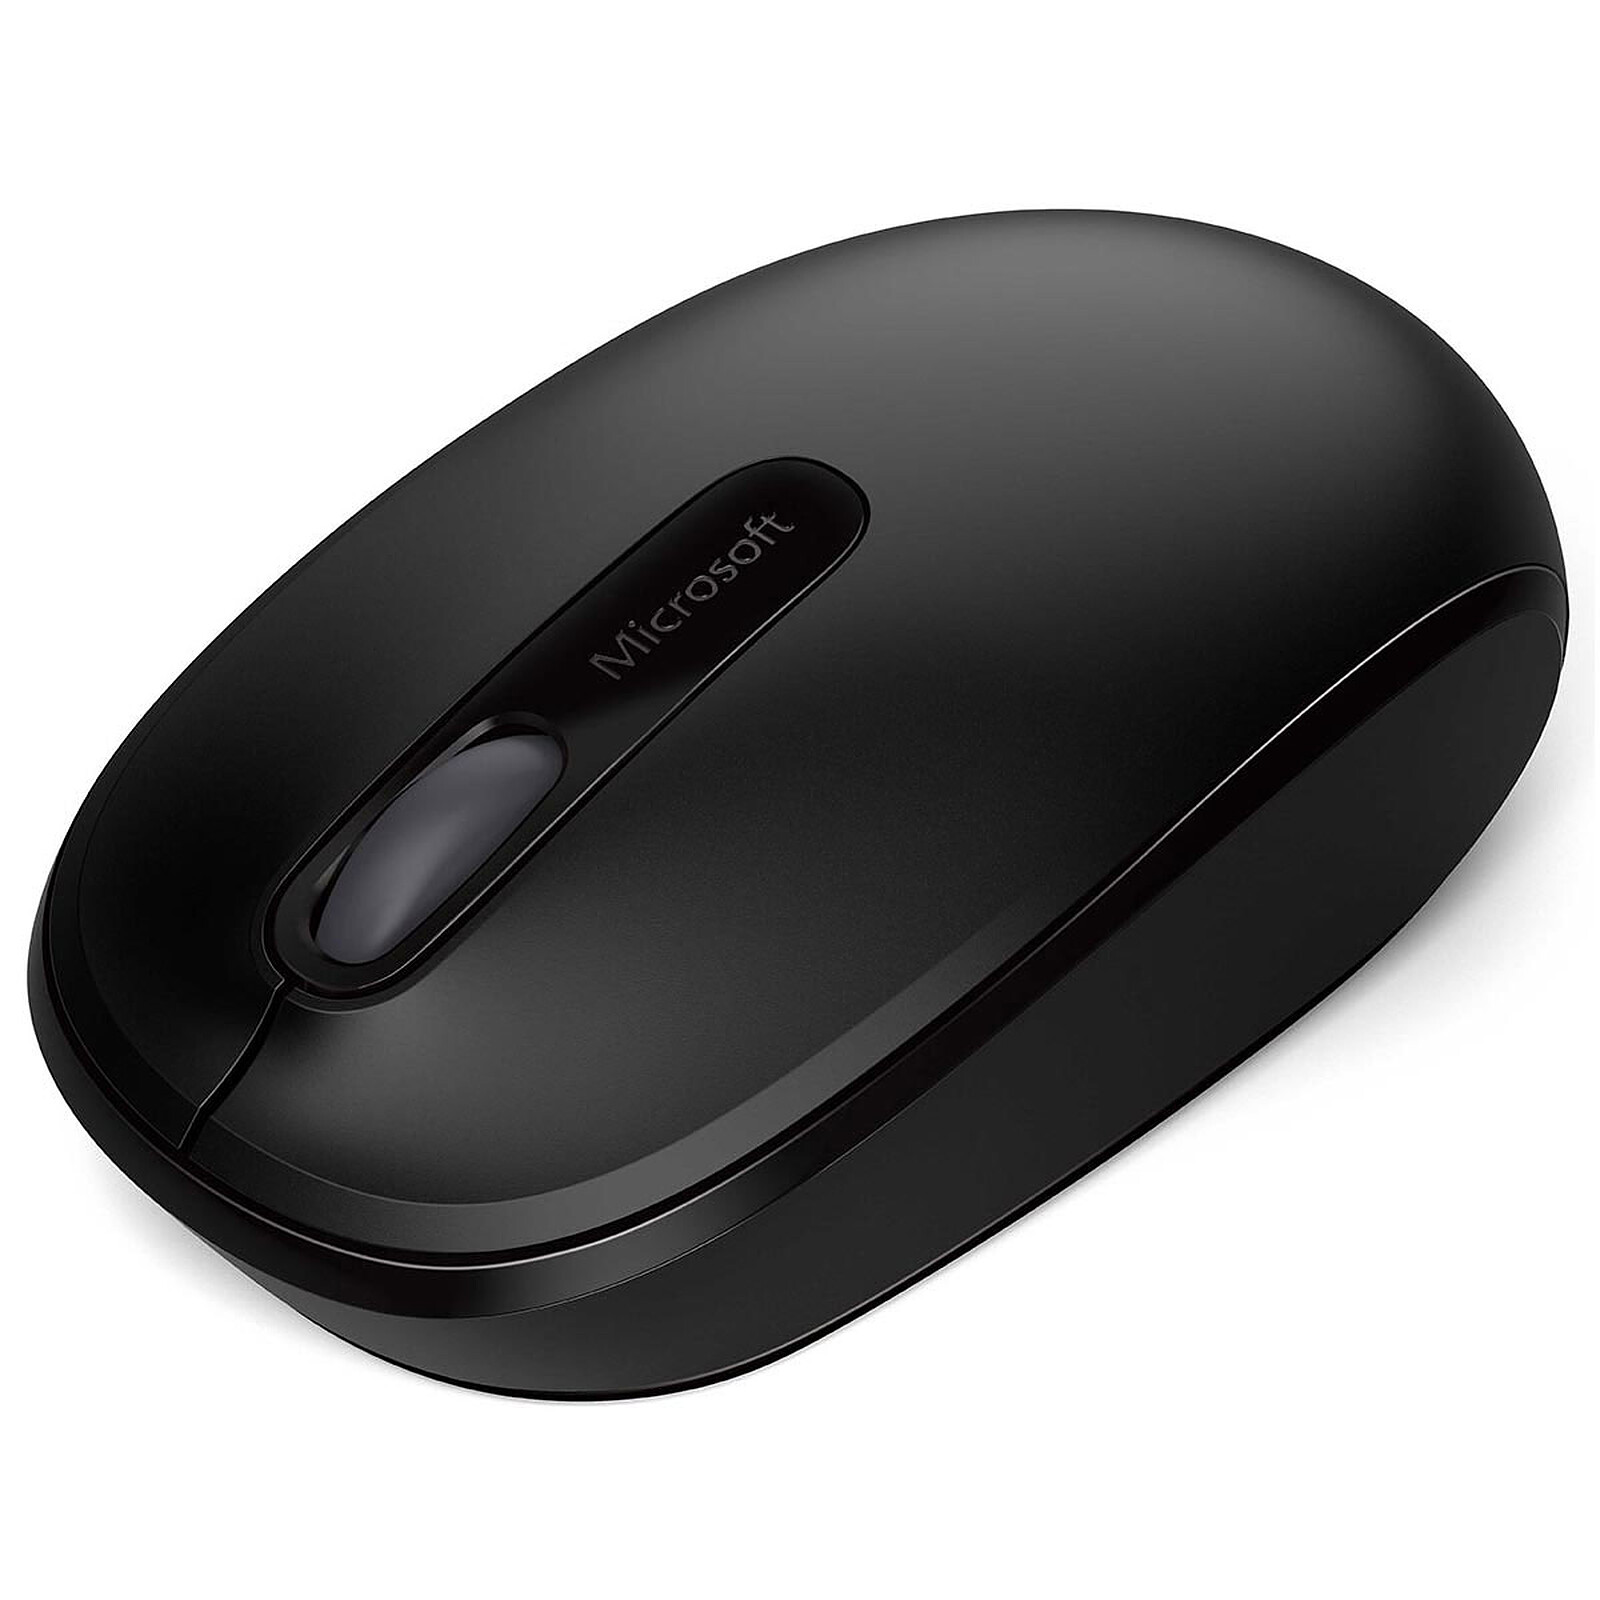 Microsoft Wireless Mobile Mouse 3500 Noire - Souris PC - Garantie